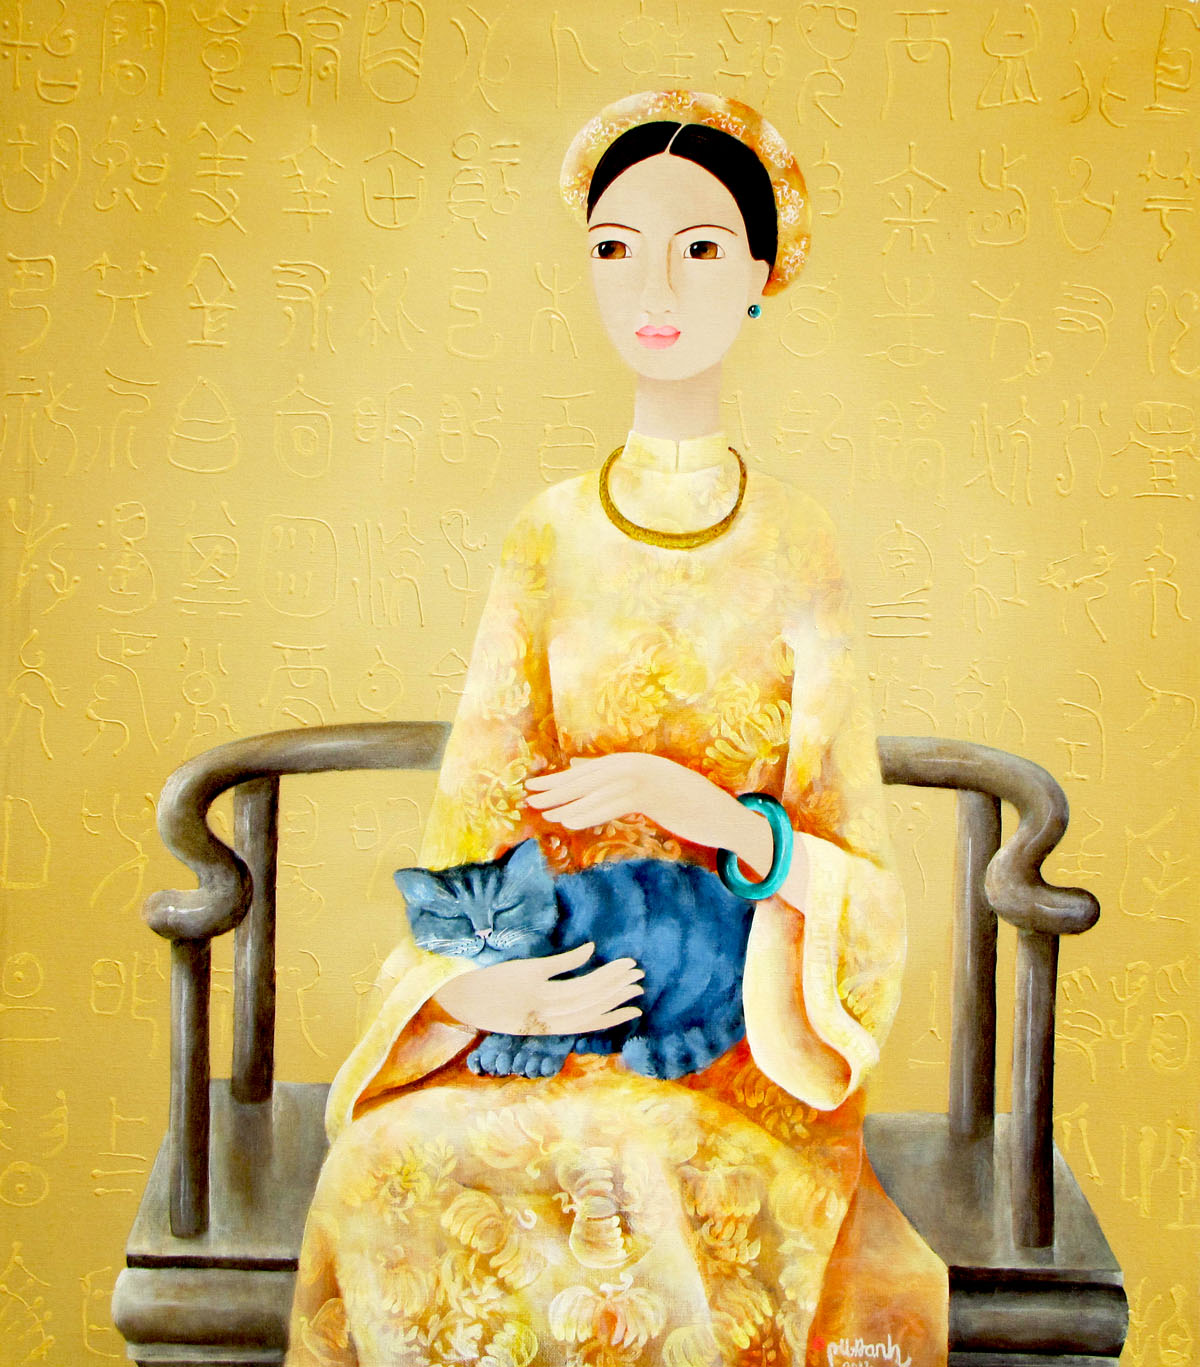 abstract portrait paintings|Vietnam Artist